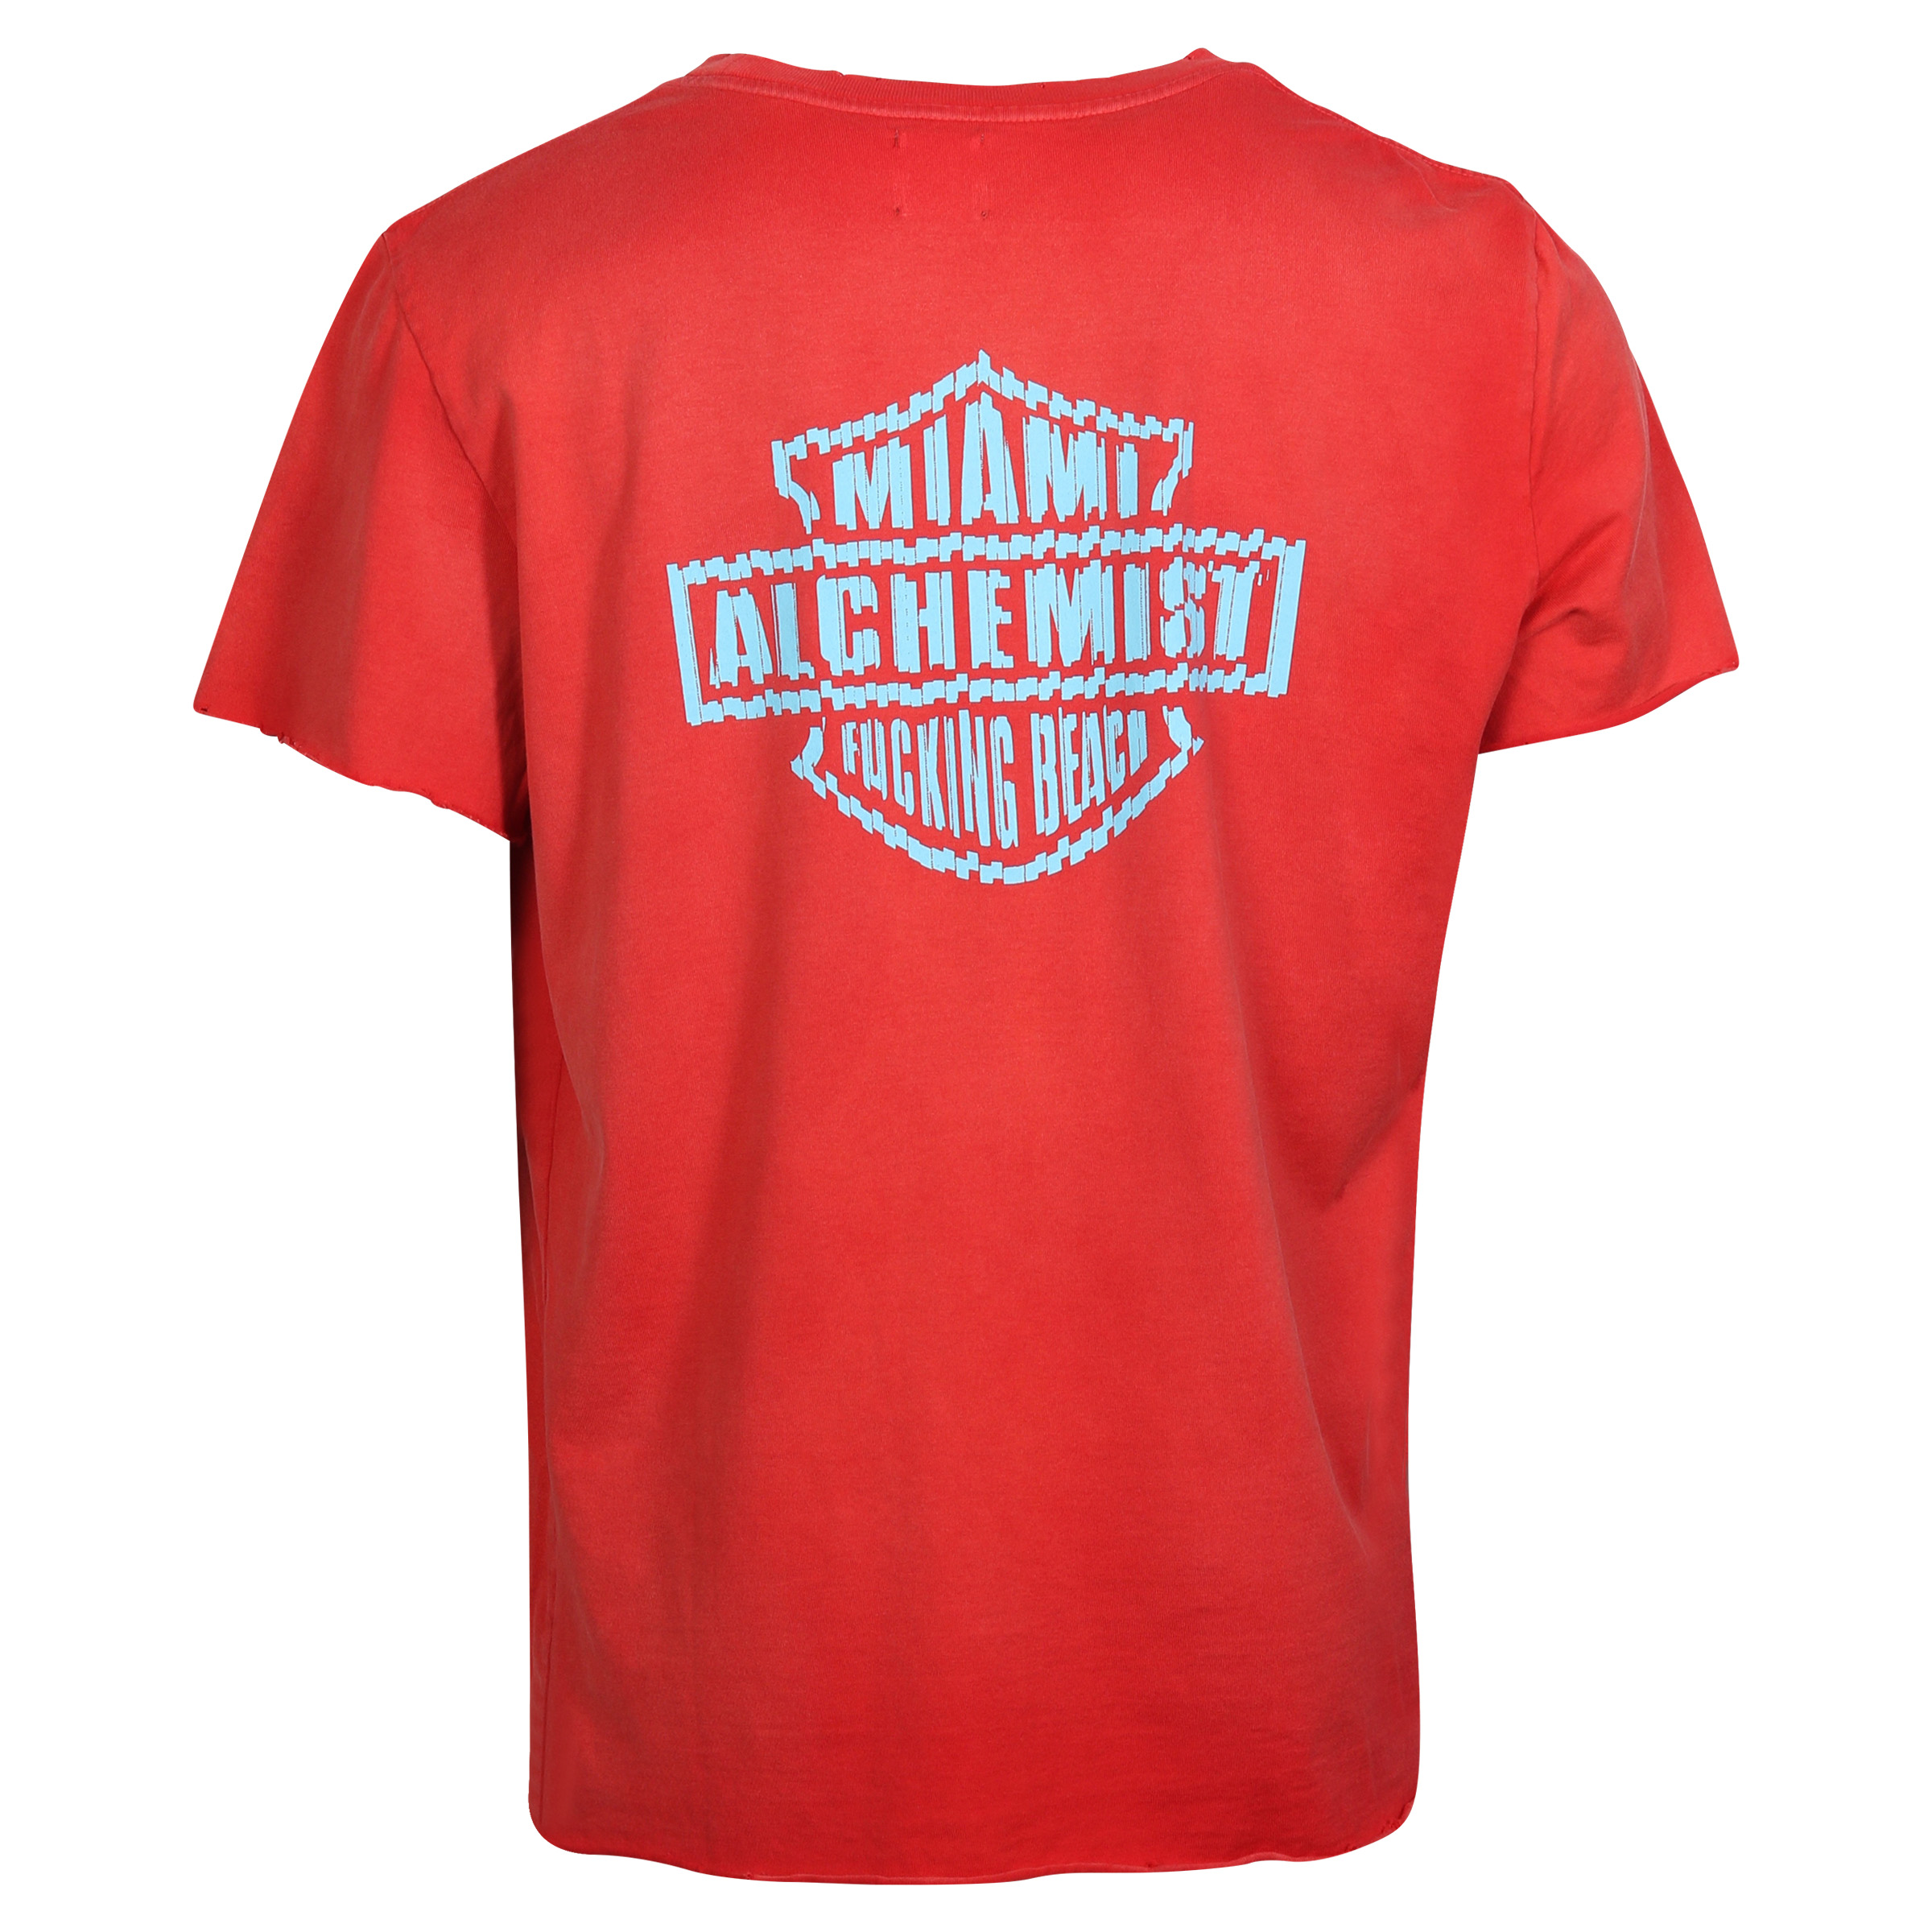 Unisex Alchemist T-Shirt McRae in Red Back Printed